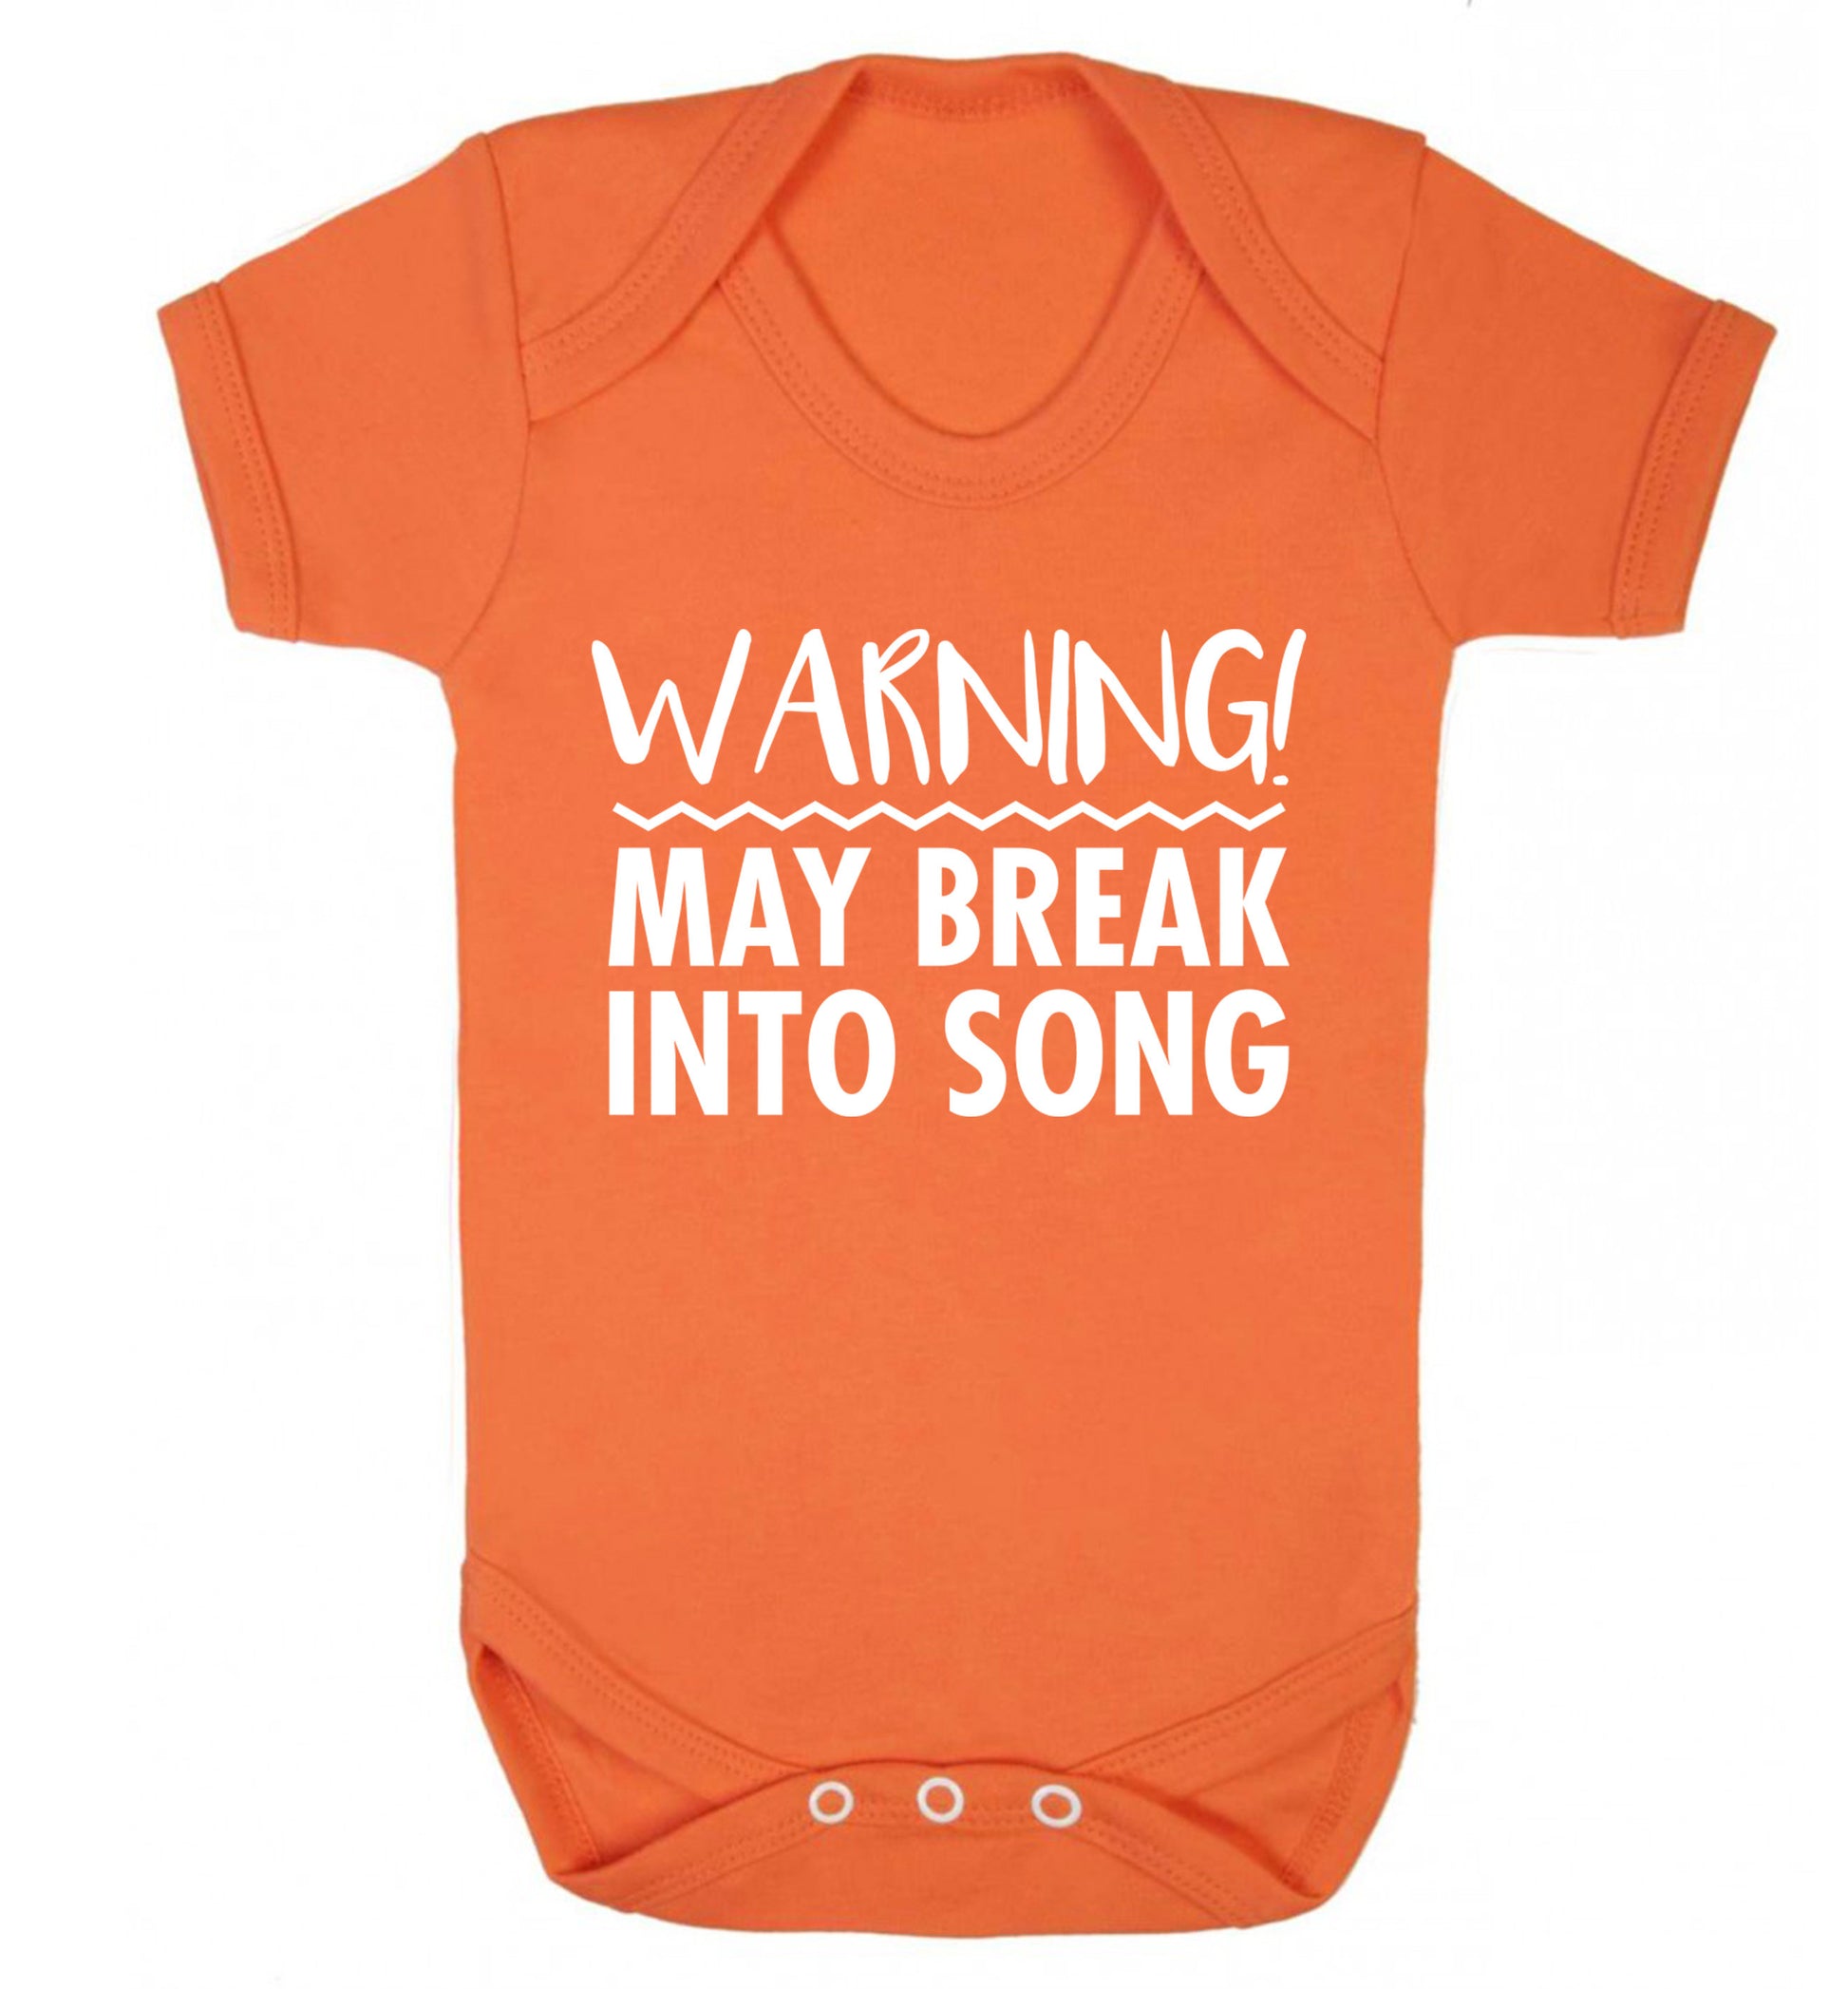 Warning may break into song Baby Vest orange 18-24 months